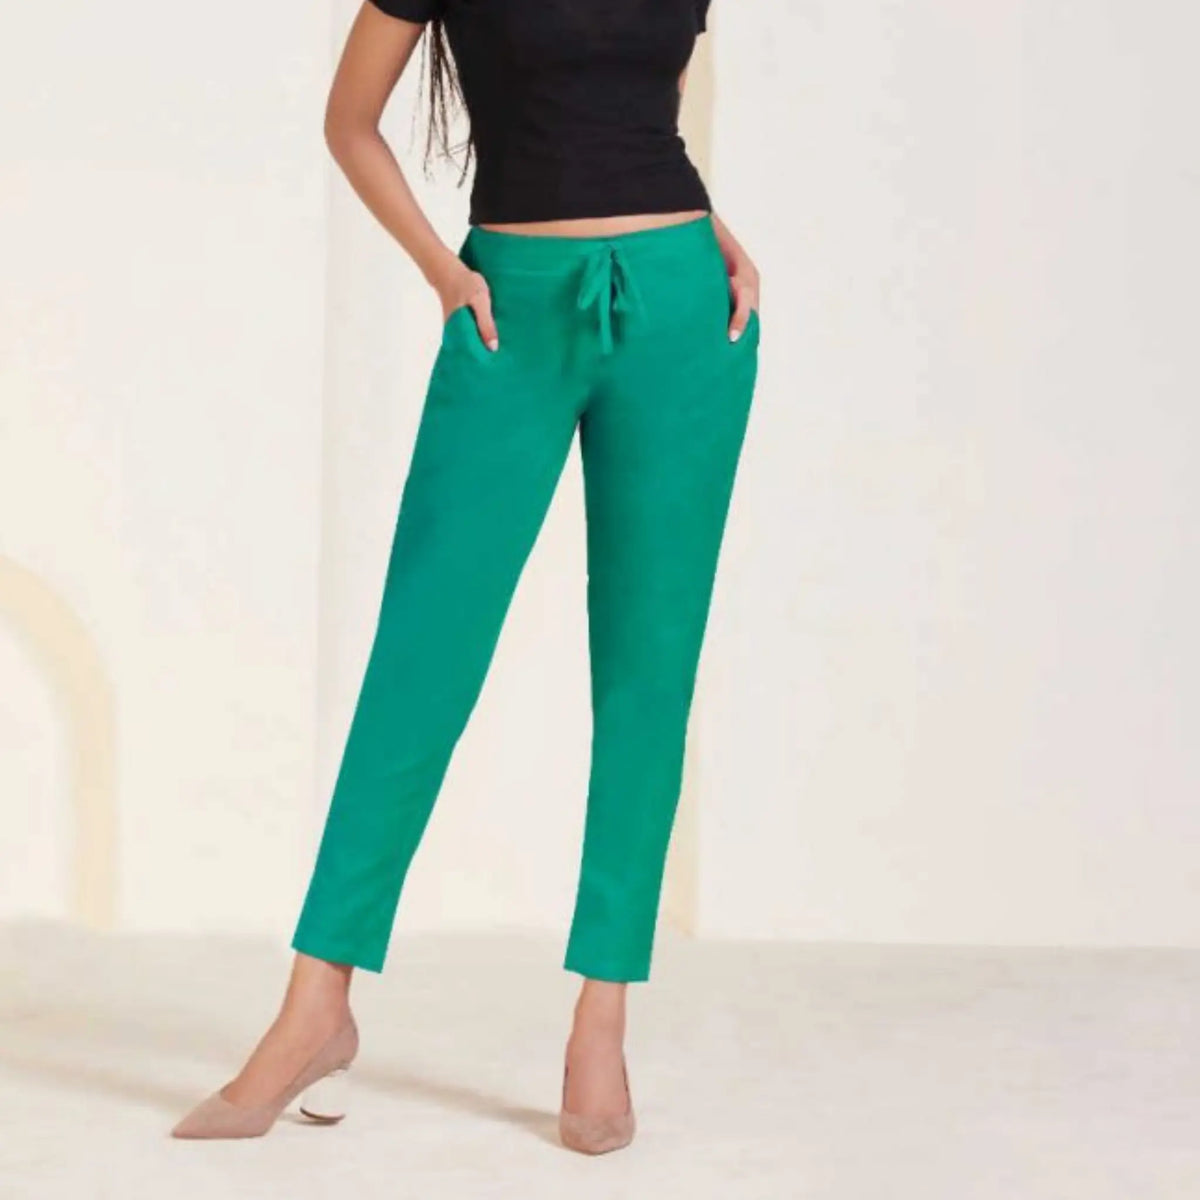 Teal (Greenish-Blue) Cotton Polo Pants